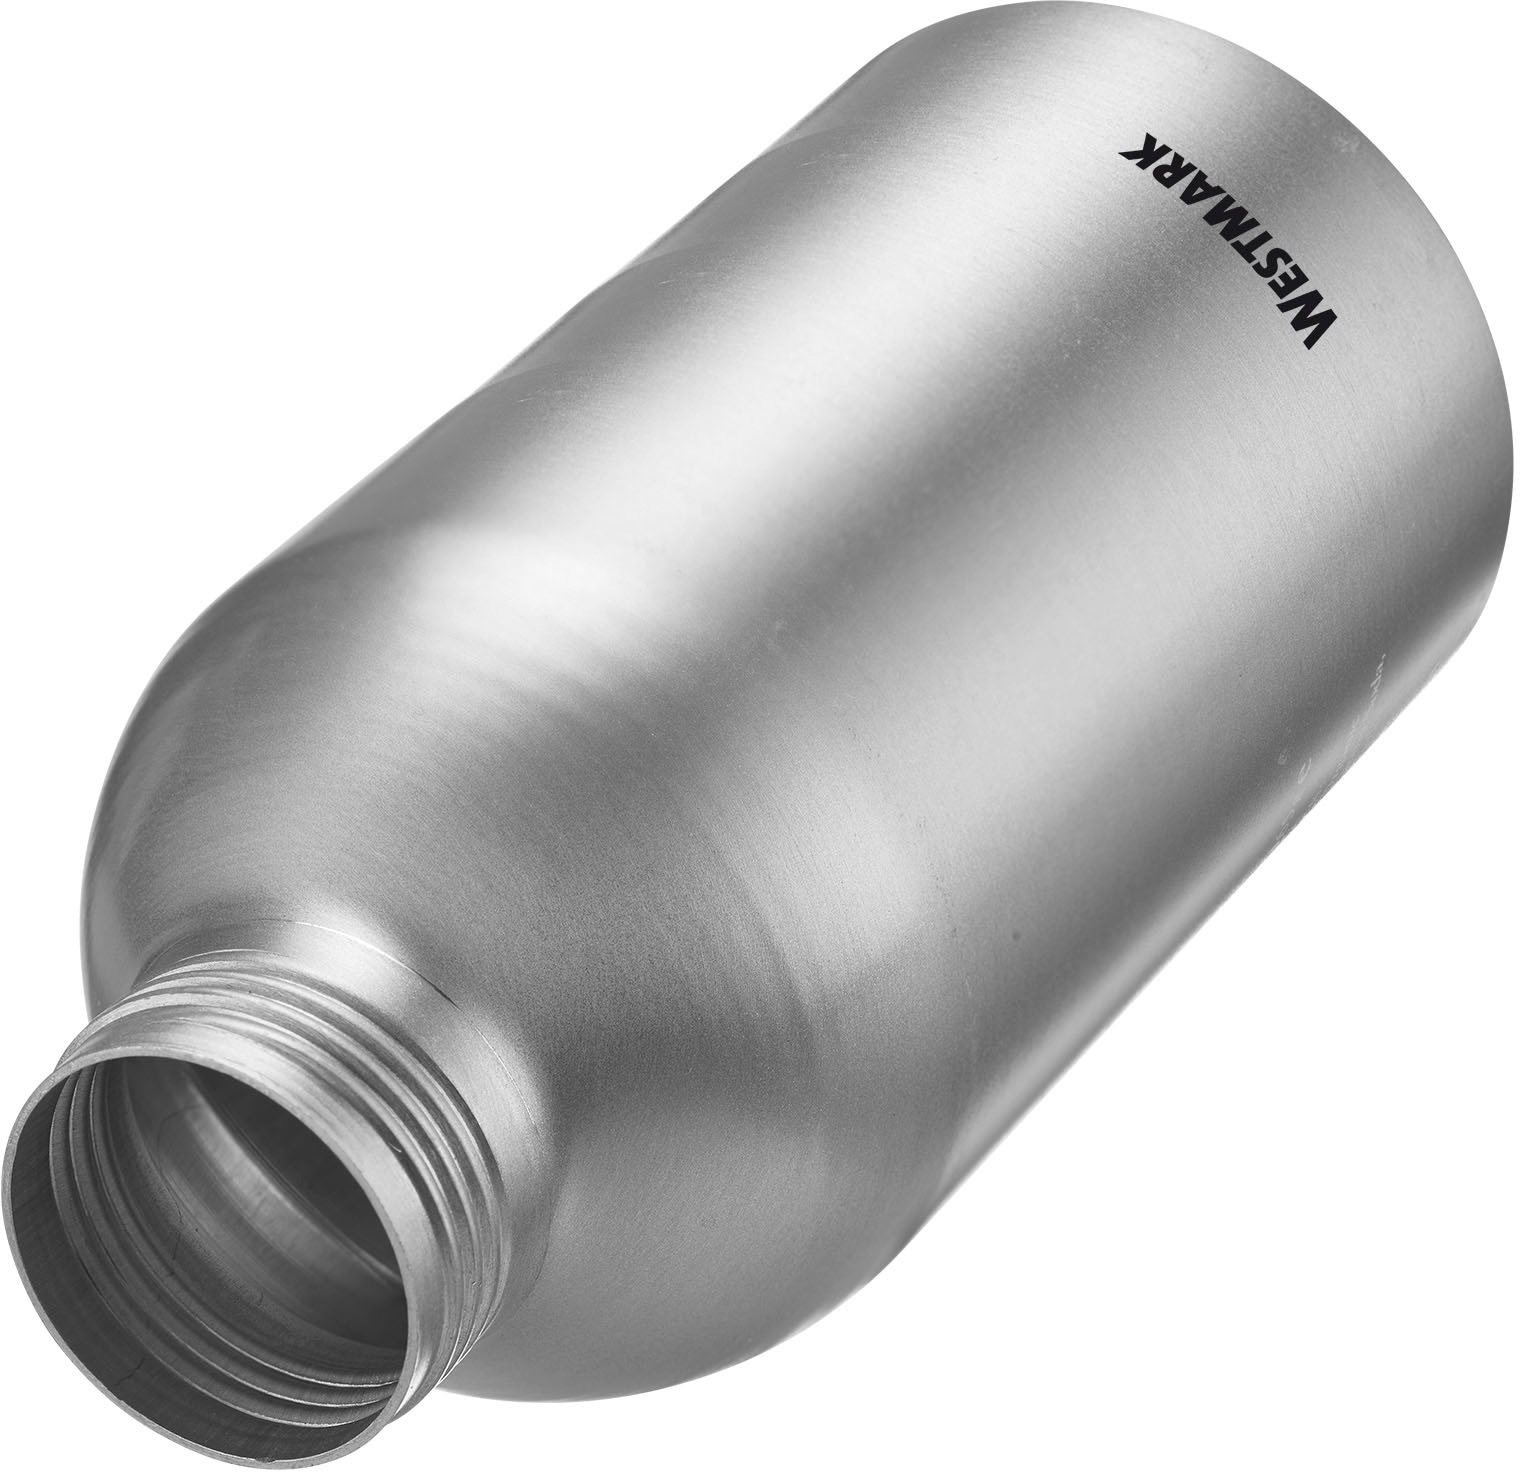 WESTMARK Salzstreuer »Omega«, aus Aluminium, mit Deckel, 650 ml